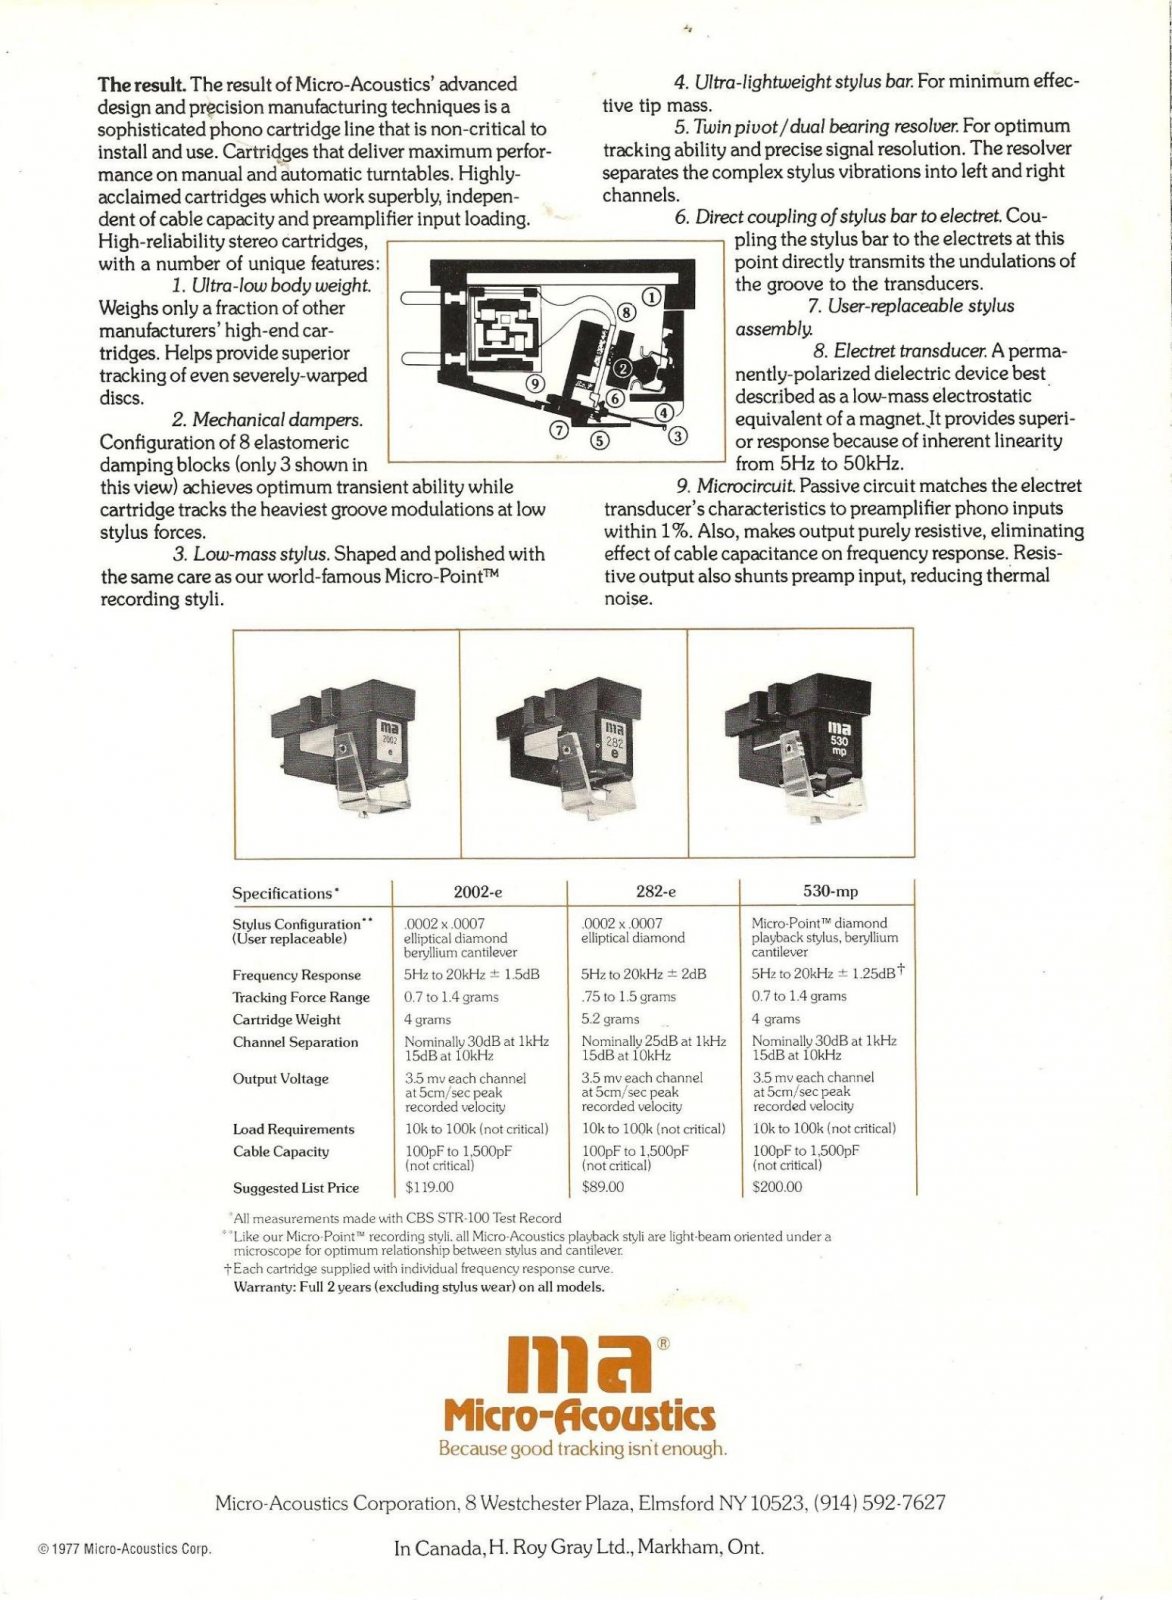 micro-acoustics-brochure-rear.jpg